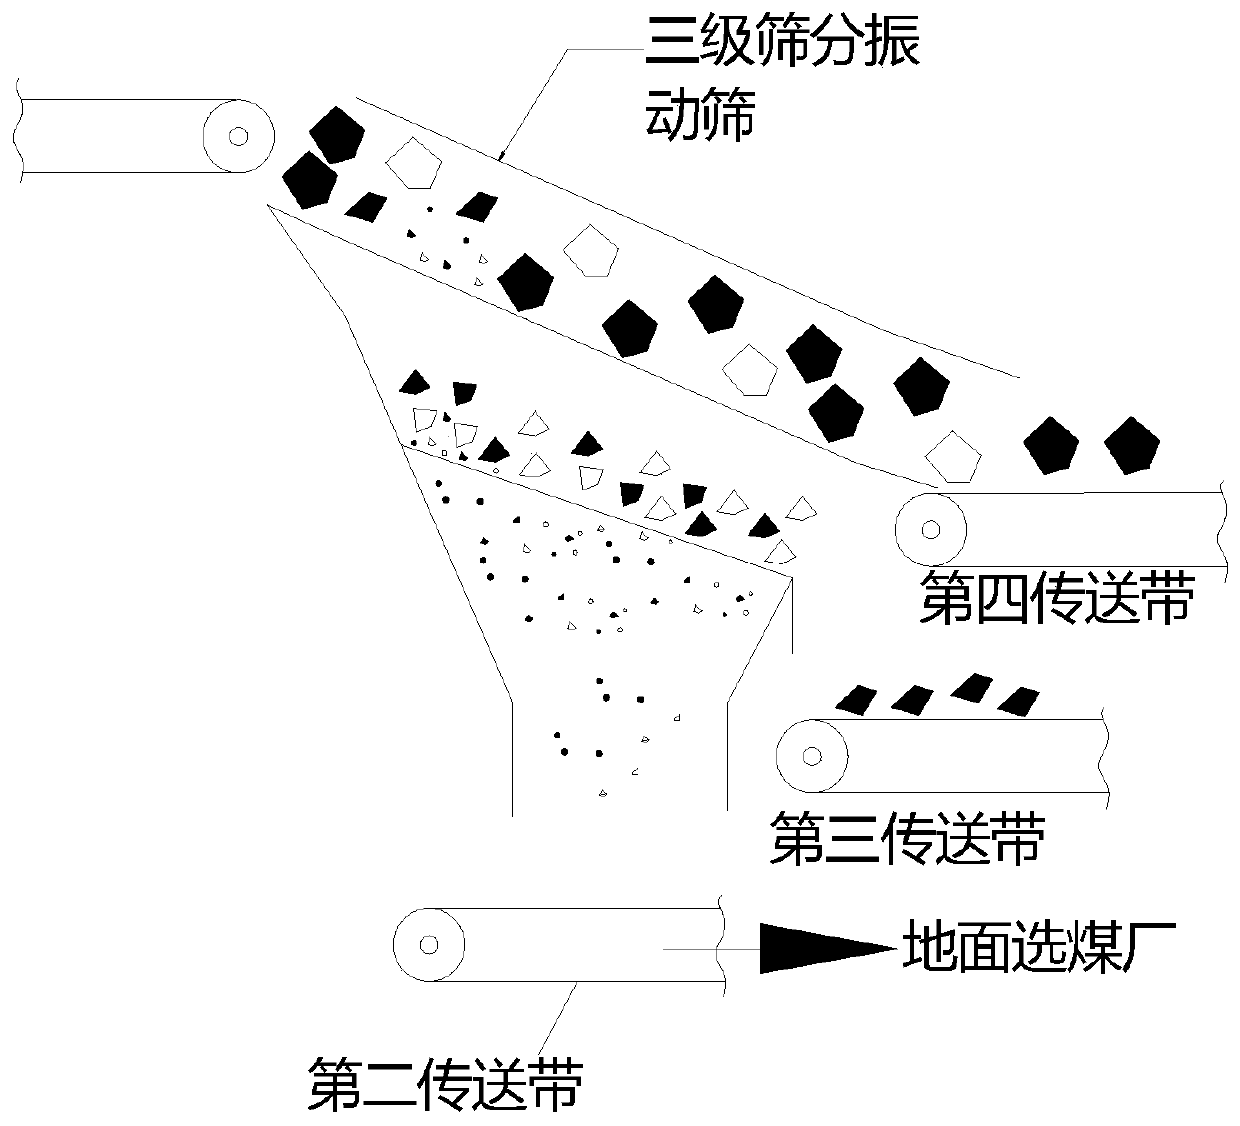 Underground arrangement process based on coal gangue photoelectric separation